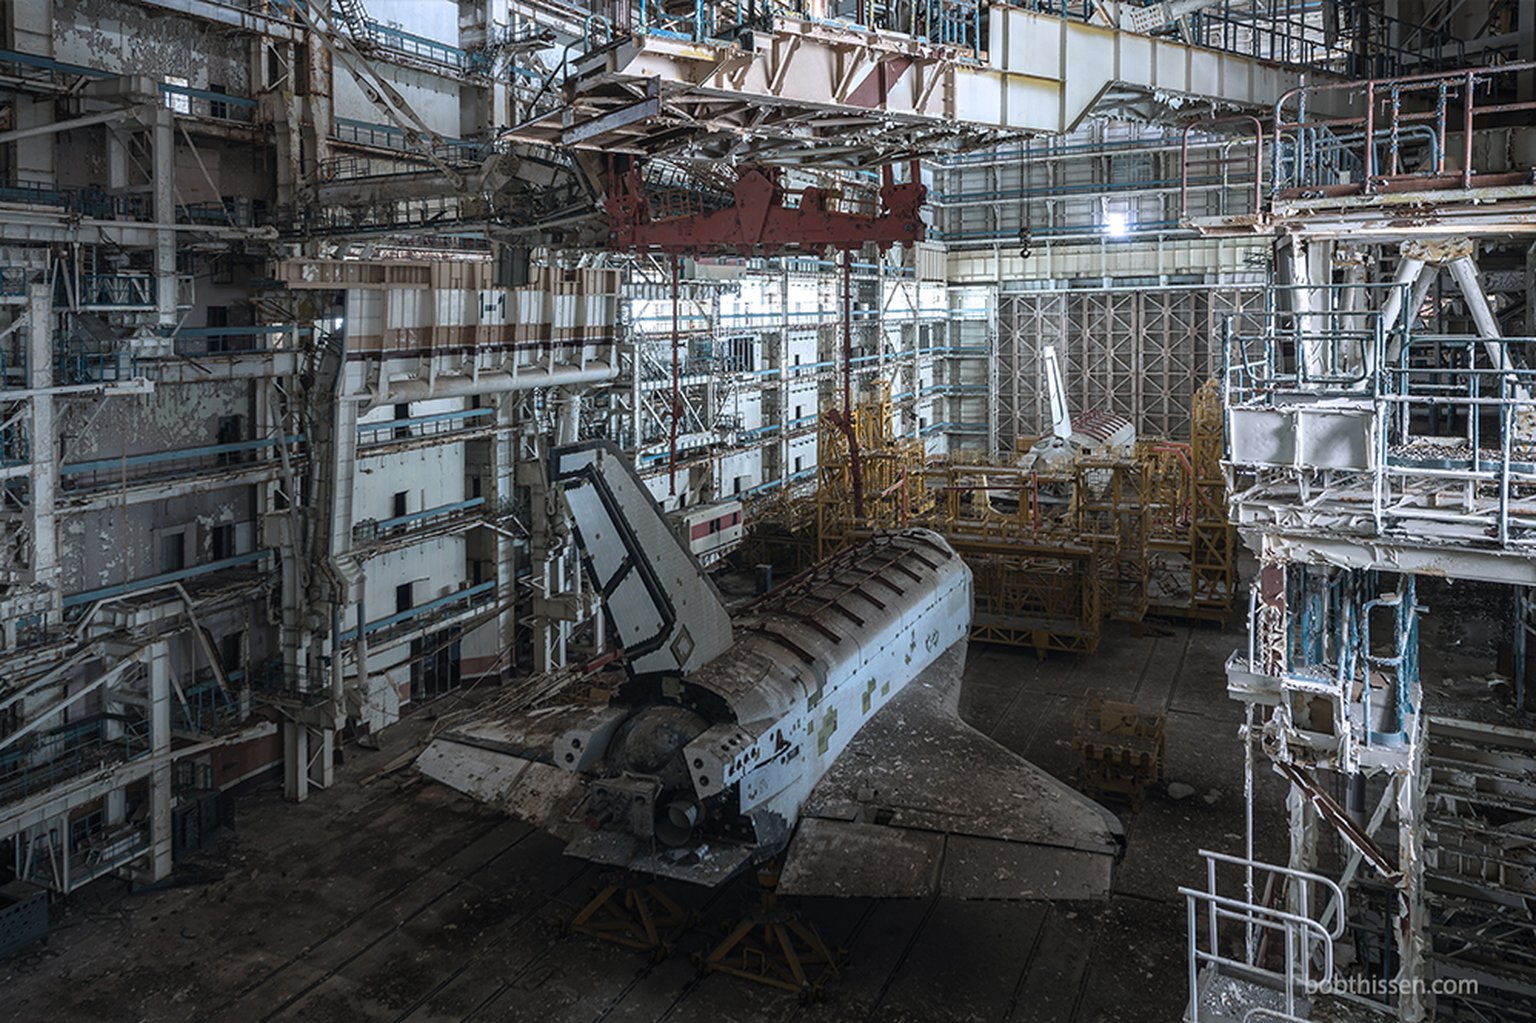 Bujan Space Shuttle der Sowjetuion
http://www.bobthissen.com/baikonur-abandoned-spaceshuttles/#!prettyPhoto